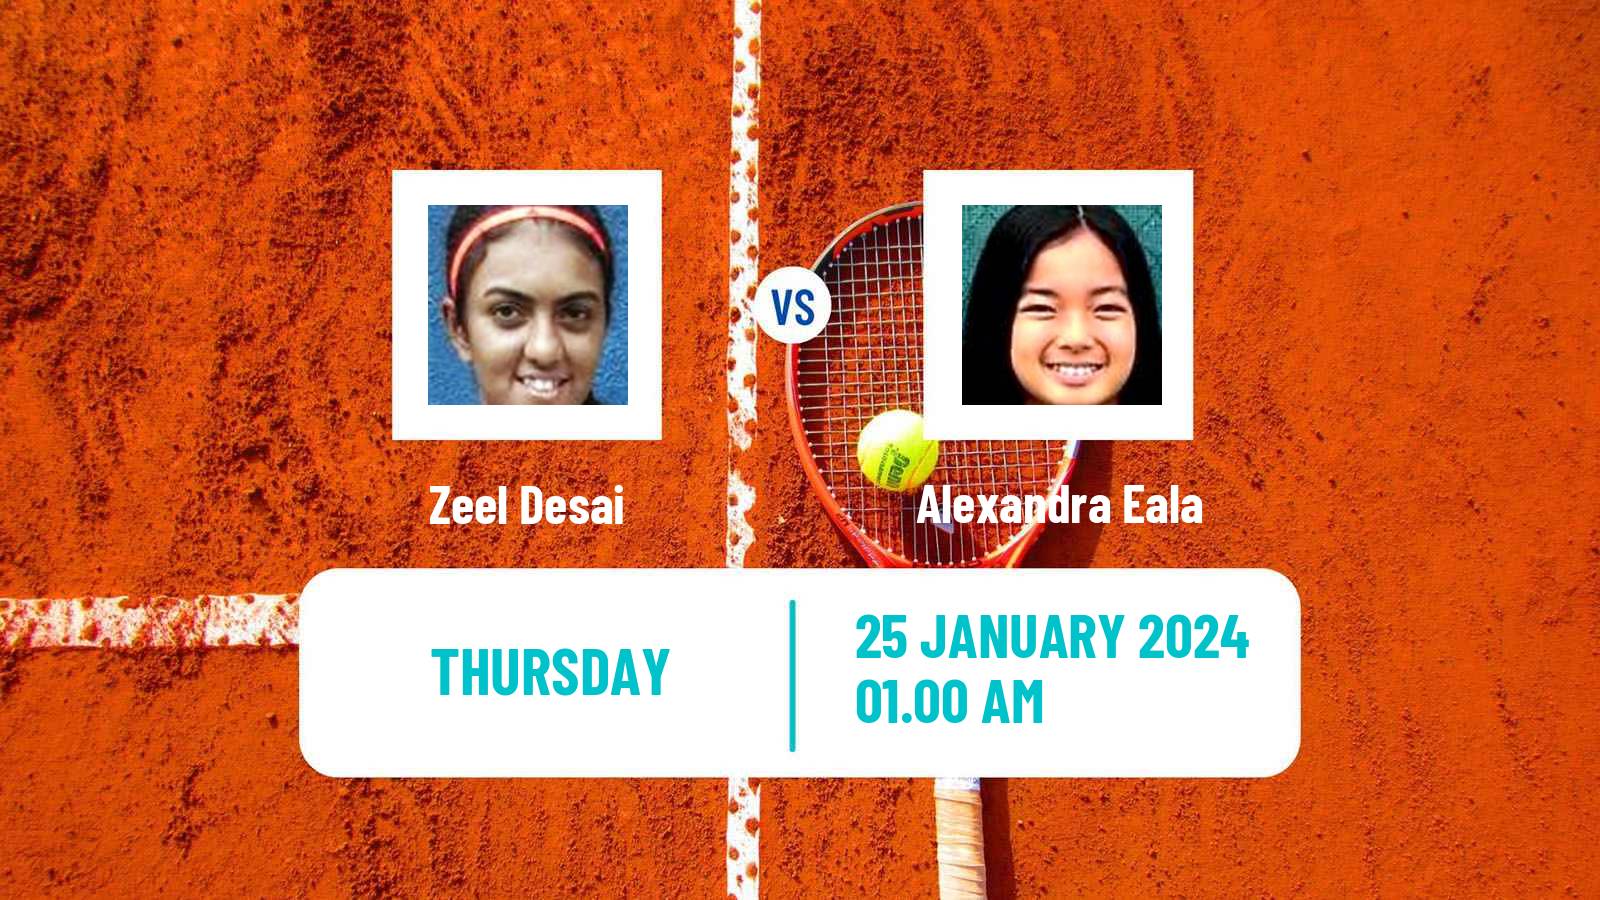 Tennis ITF W50 Pune Women Zeel Desai - Alexandra Eala